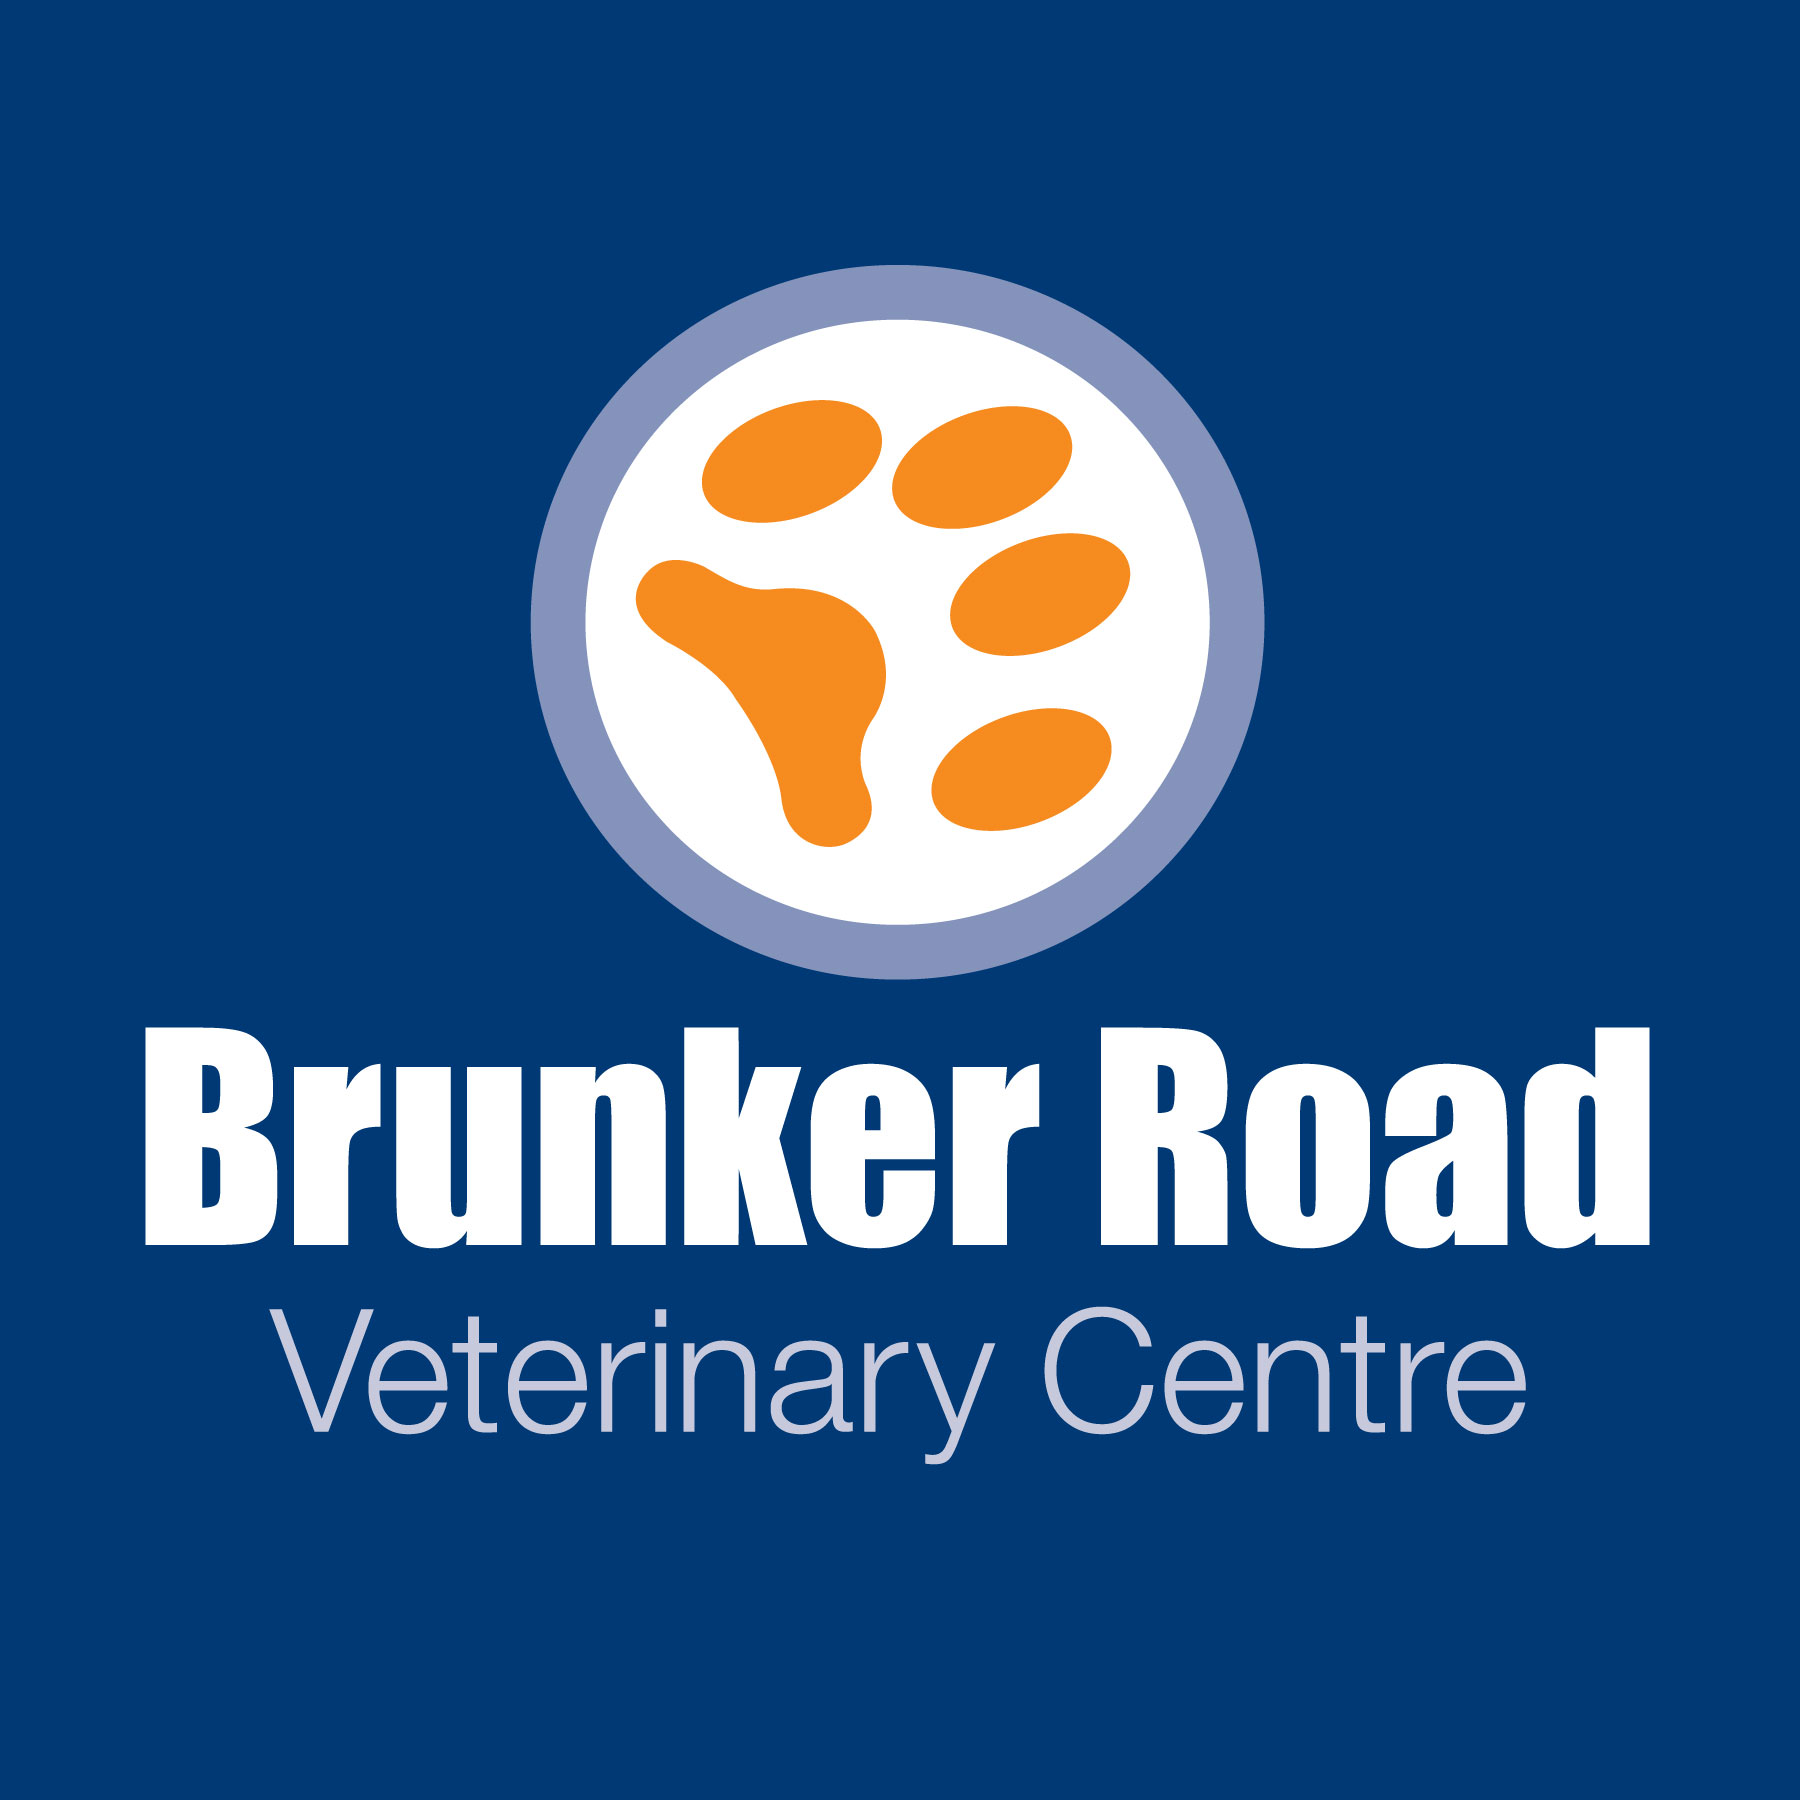 Brunker Road Veterinary Centre Veterinary Careers